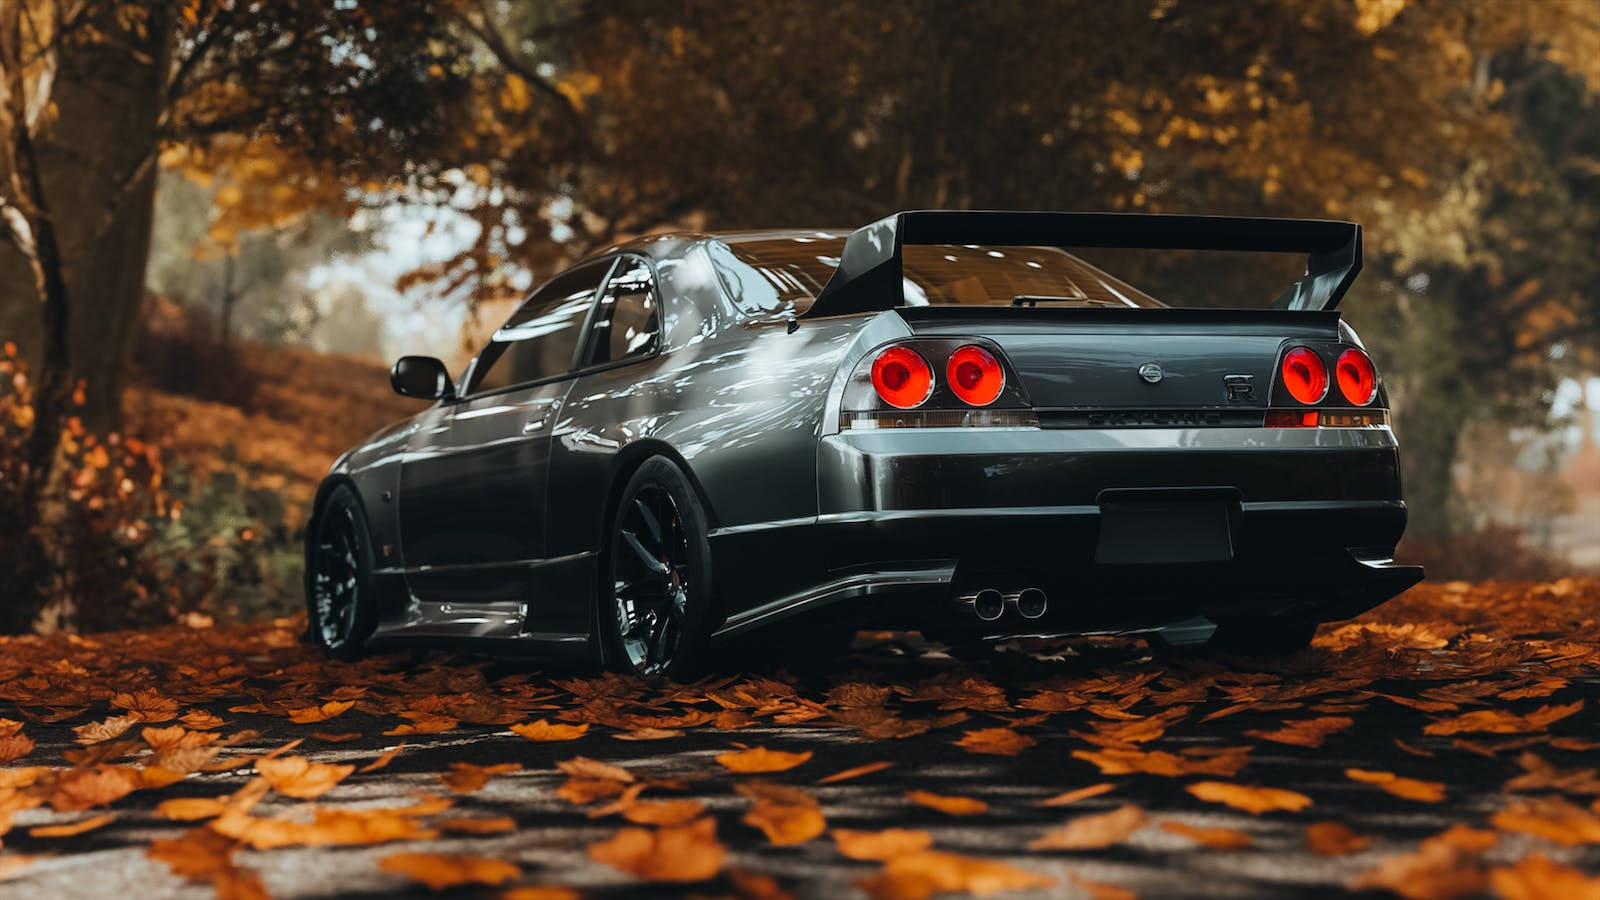 Gray Skyline Car In Autumn Background